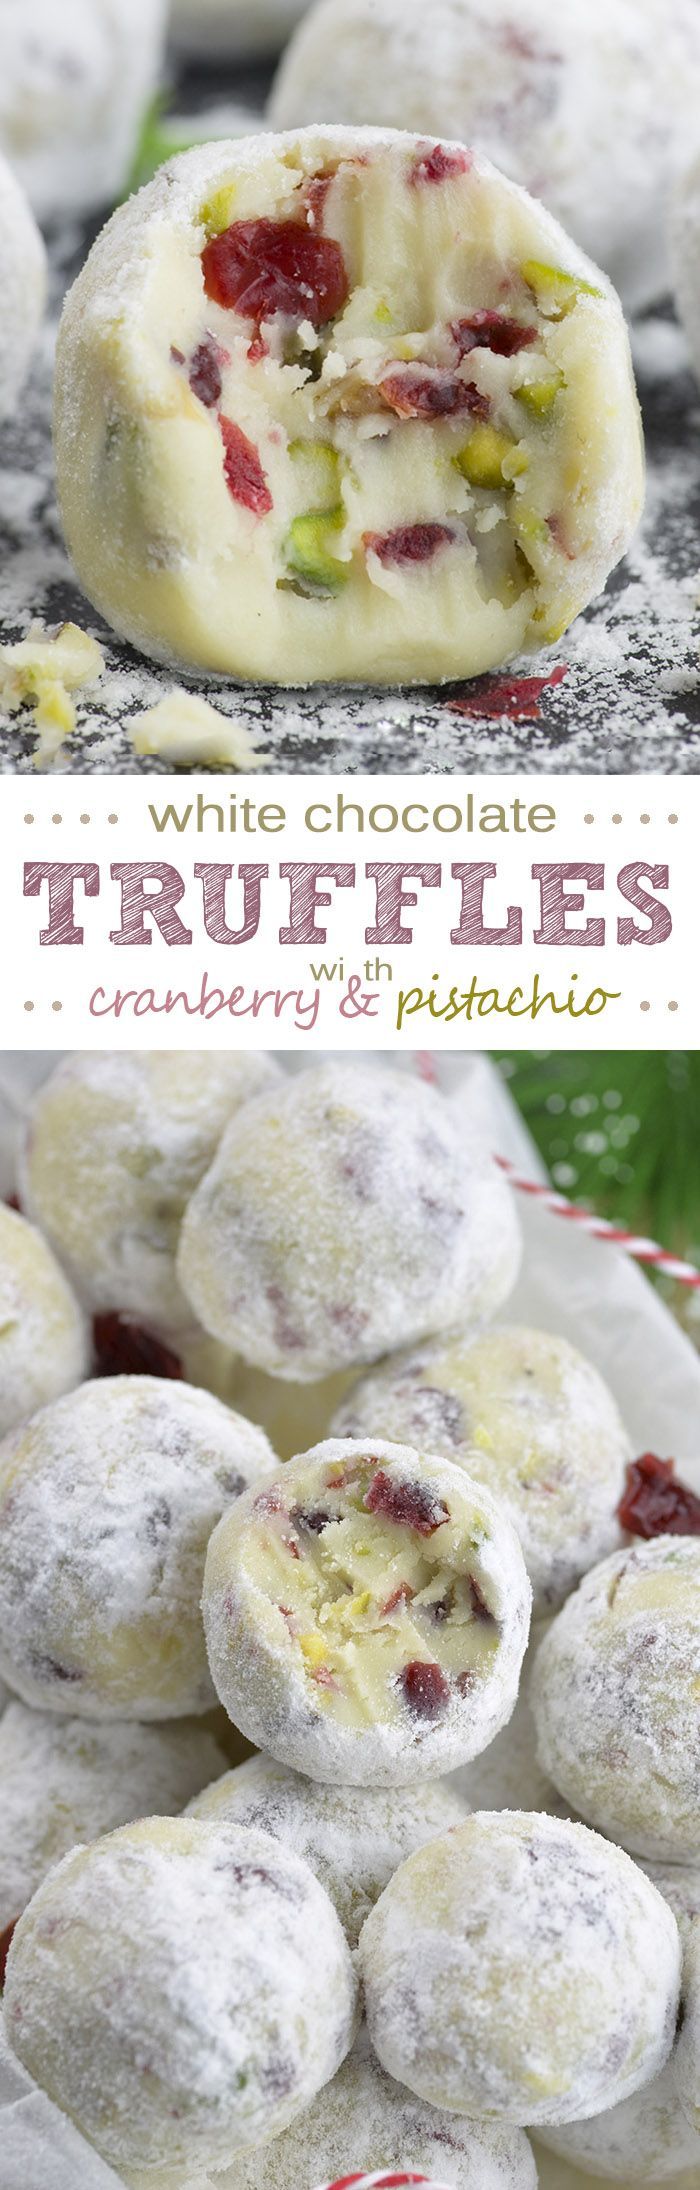 Cranberry Pistachio White Chocolate Truffles are super cute and festive no-bake de